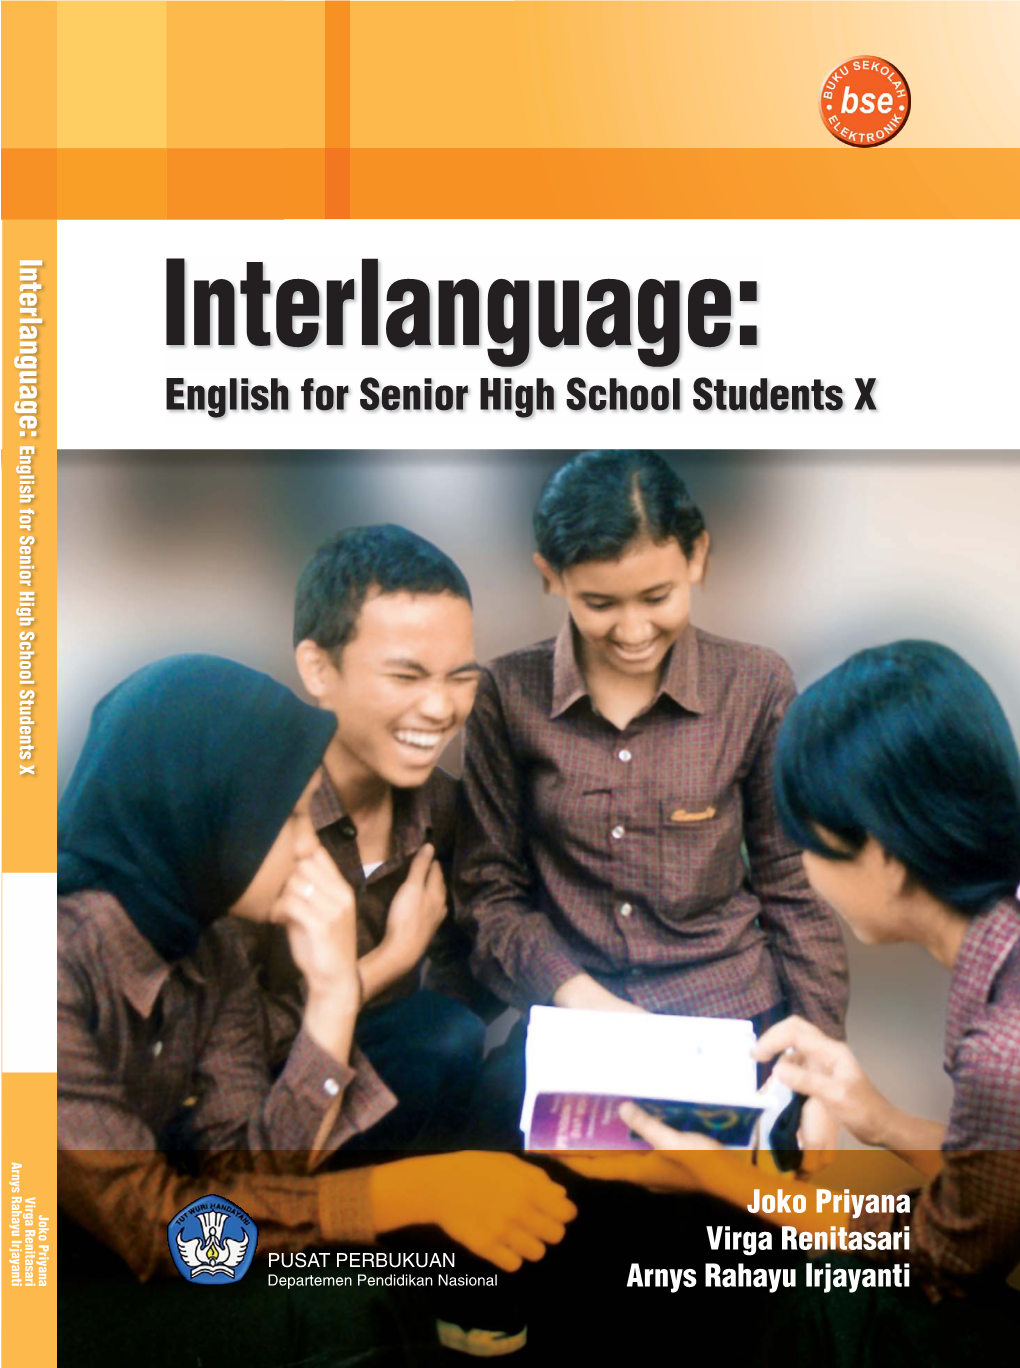 Interlanguage: Interlanguage: English for Senior High School Students X English for Senior High School Students X Arnys Rahayu Irjayanti Virga Renitasari